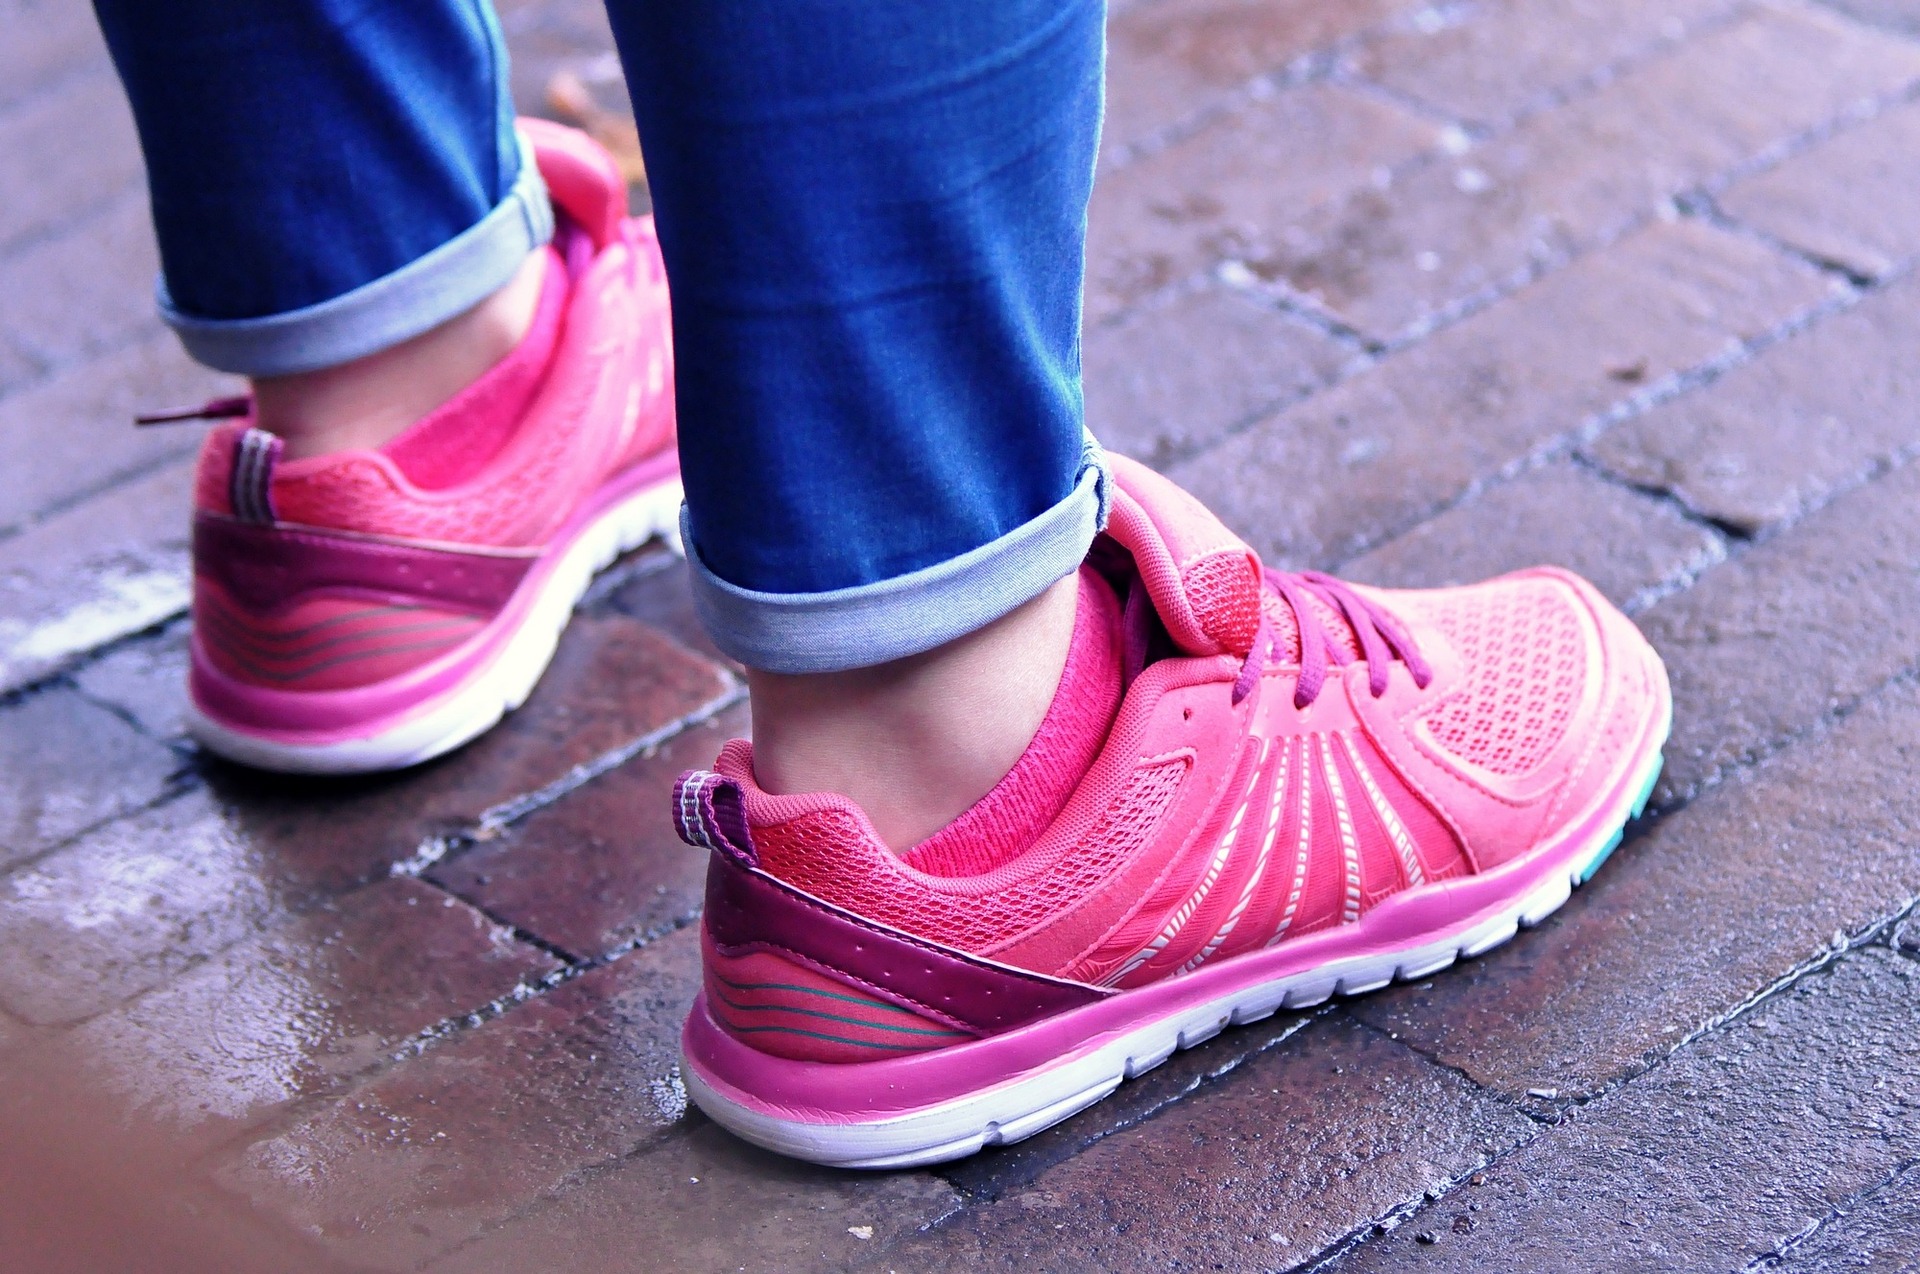 Feet wearing pink running shoes